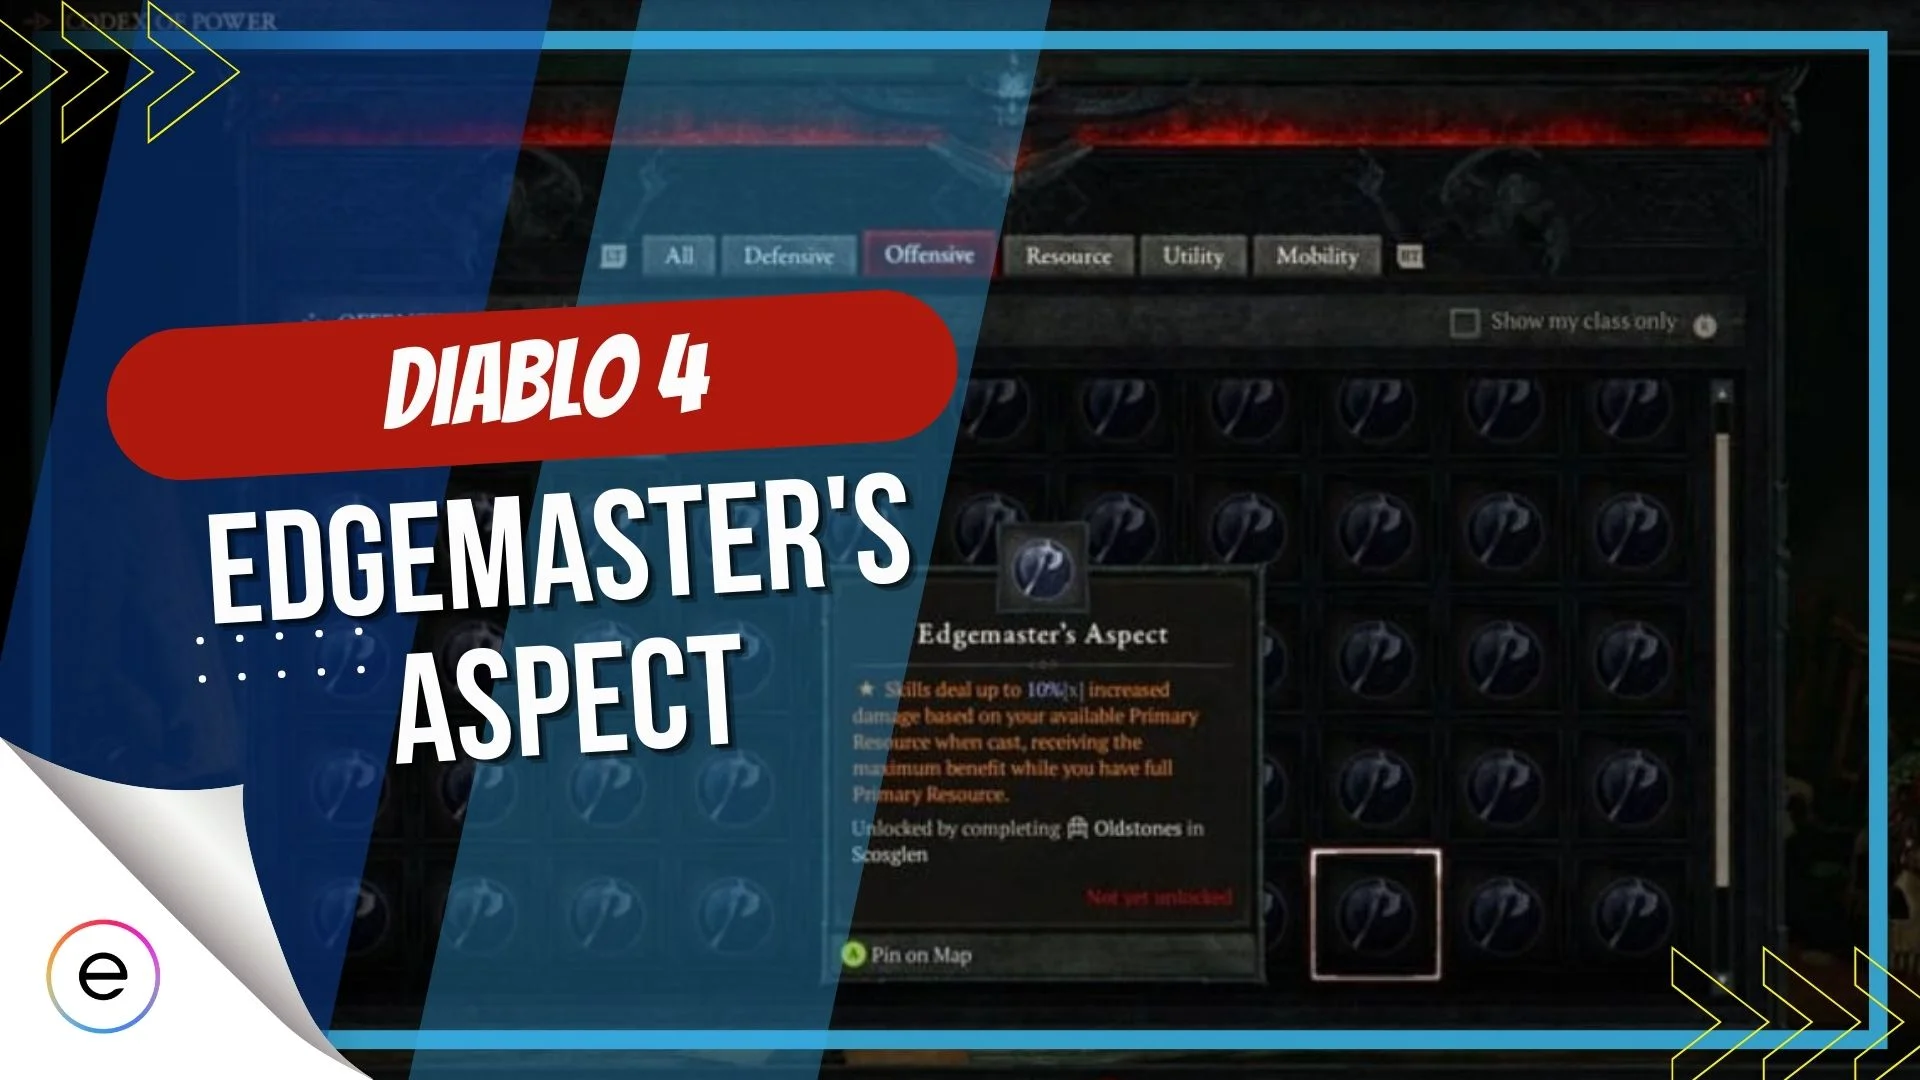 How To Get Edgemaster's Aspect in Diablo 4